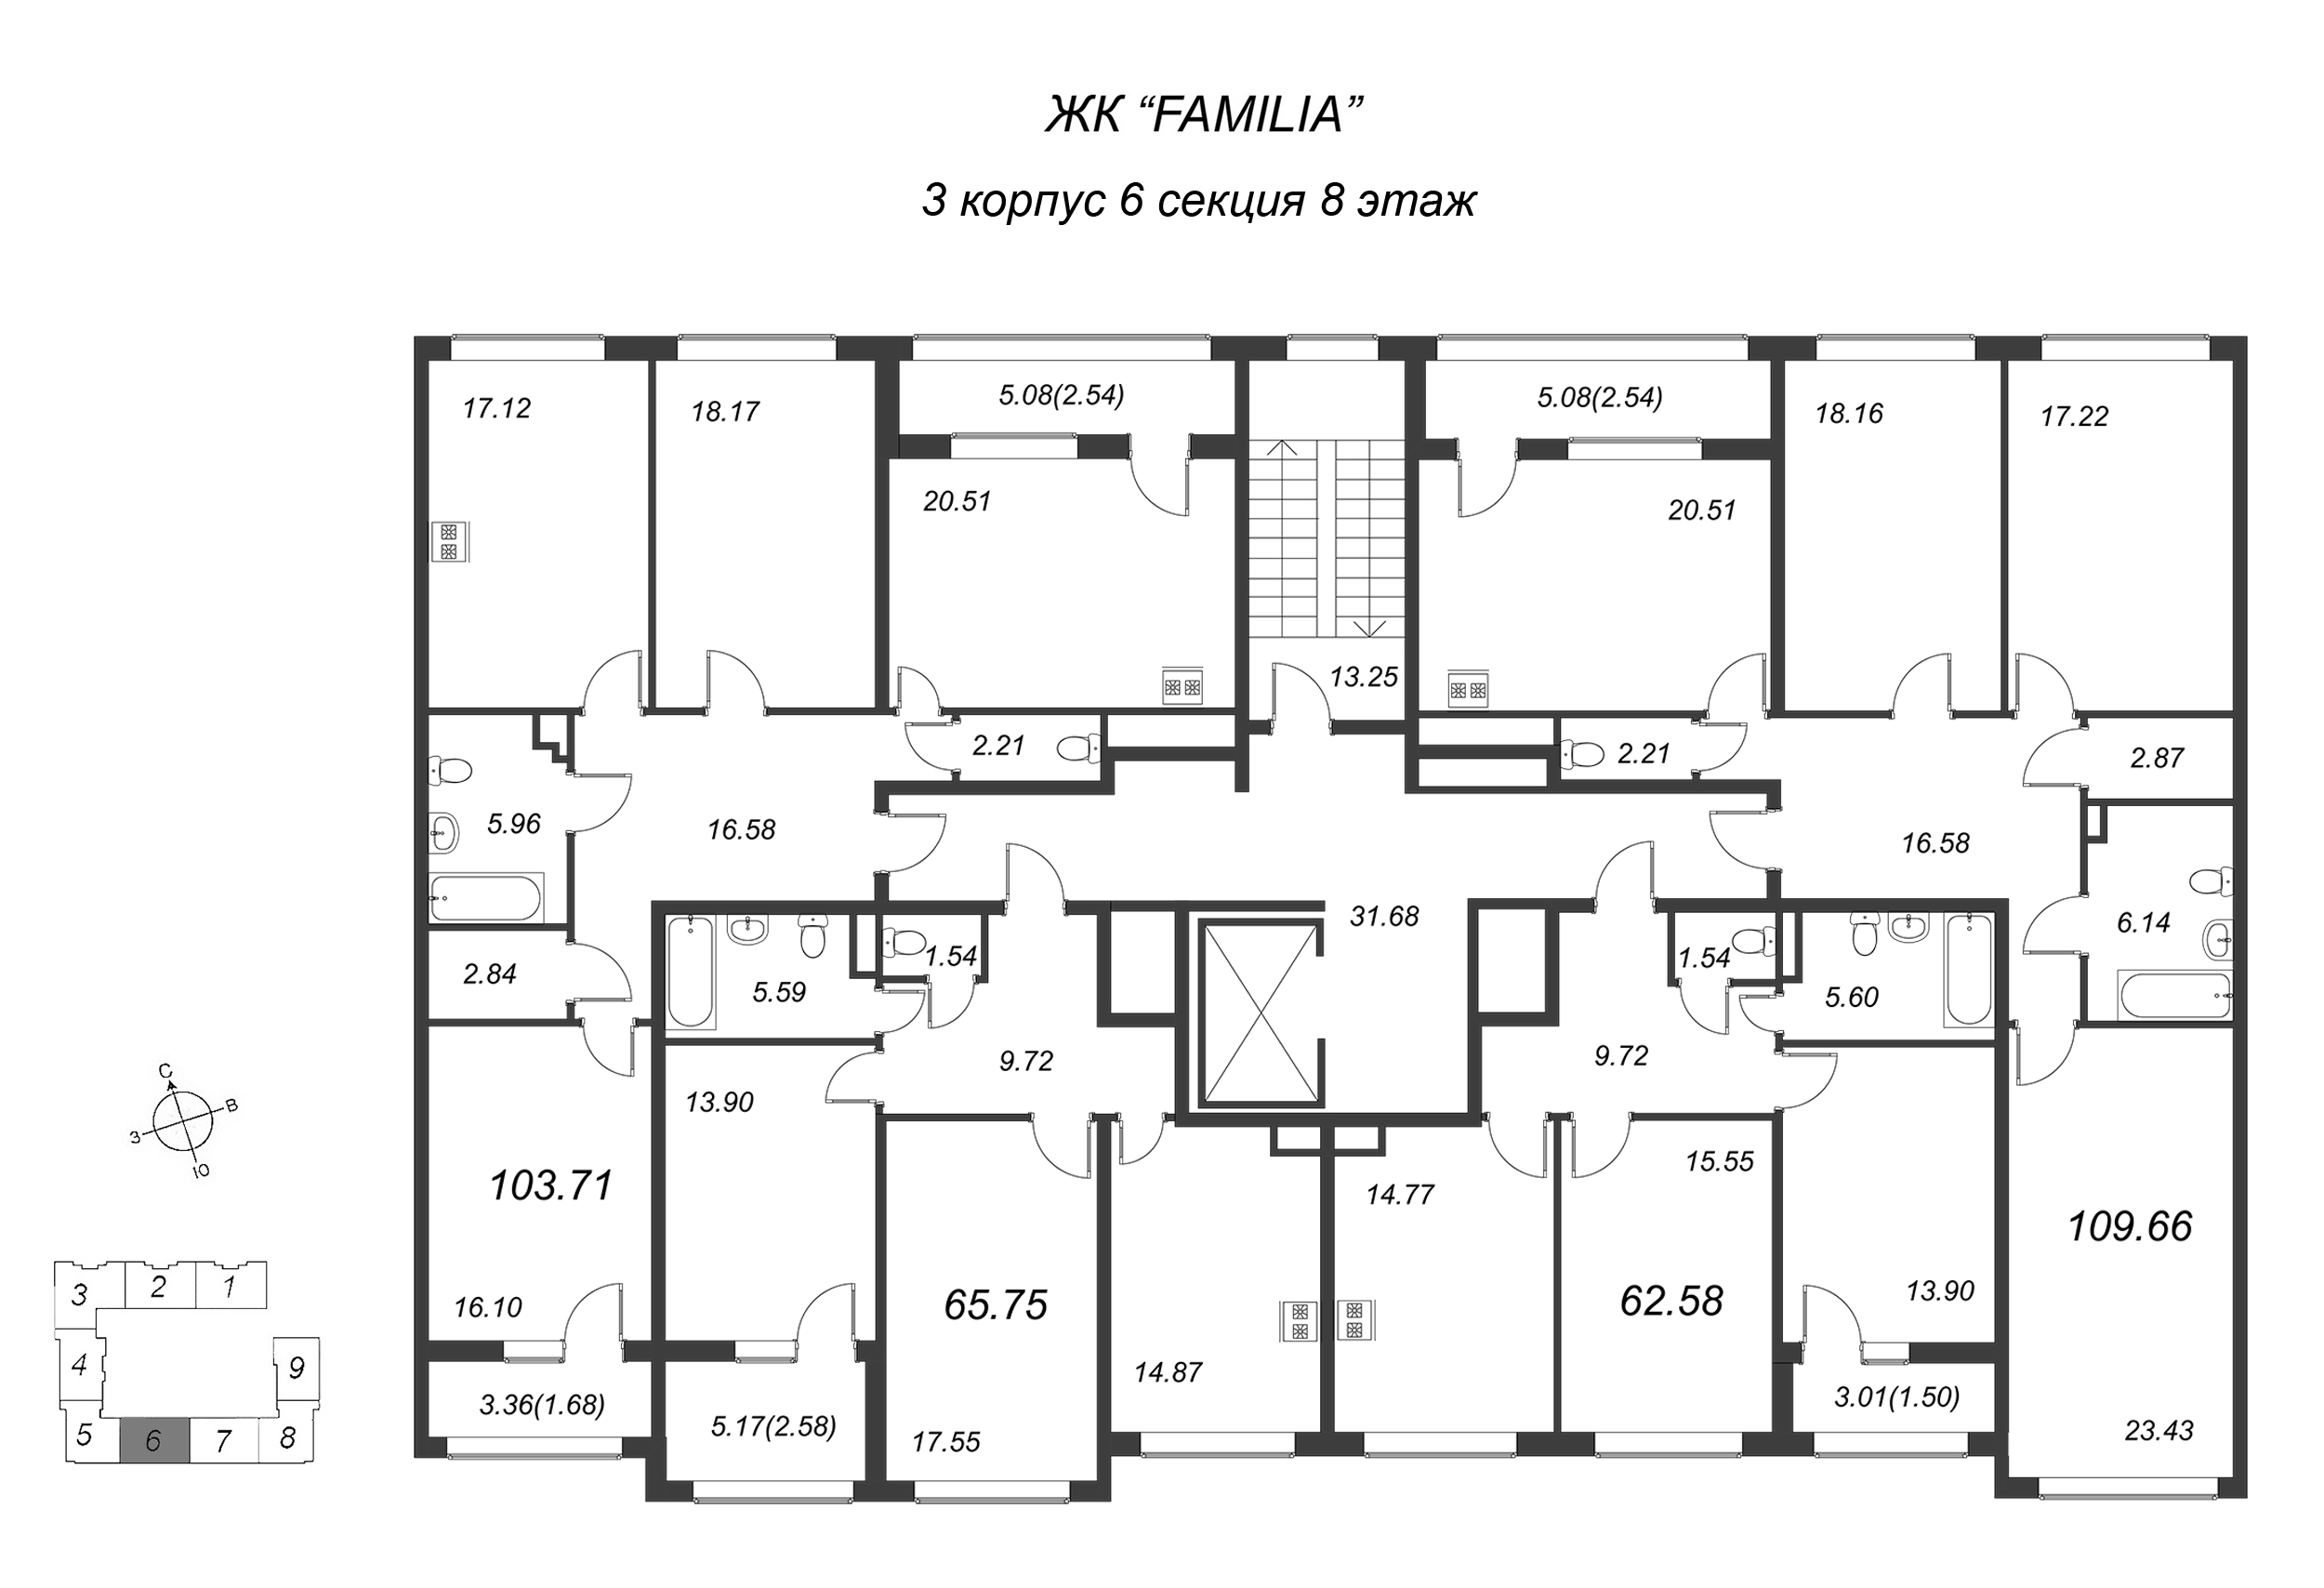 3-комнатная квартира, 110.2 м² в ЖК "FAMILIA" - планировка этажа